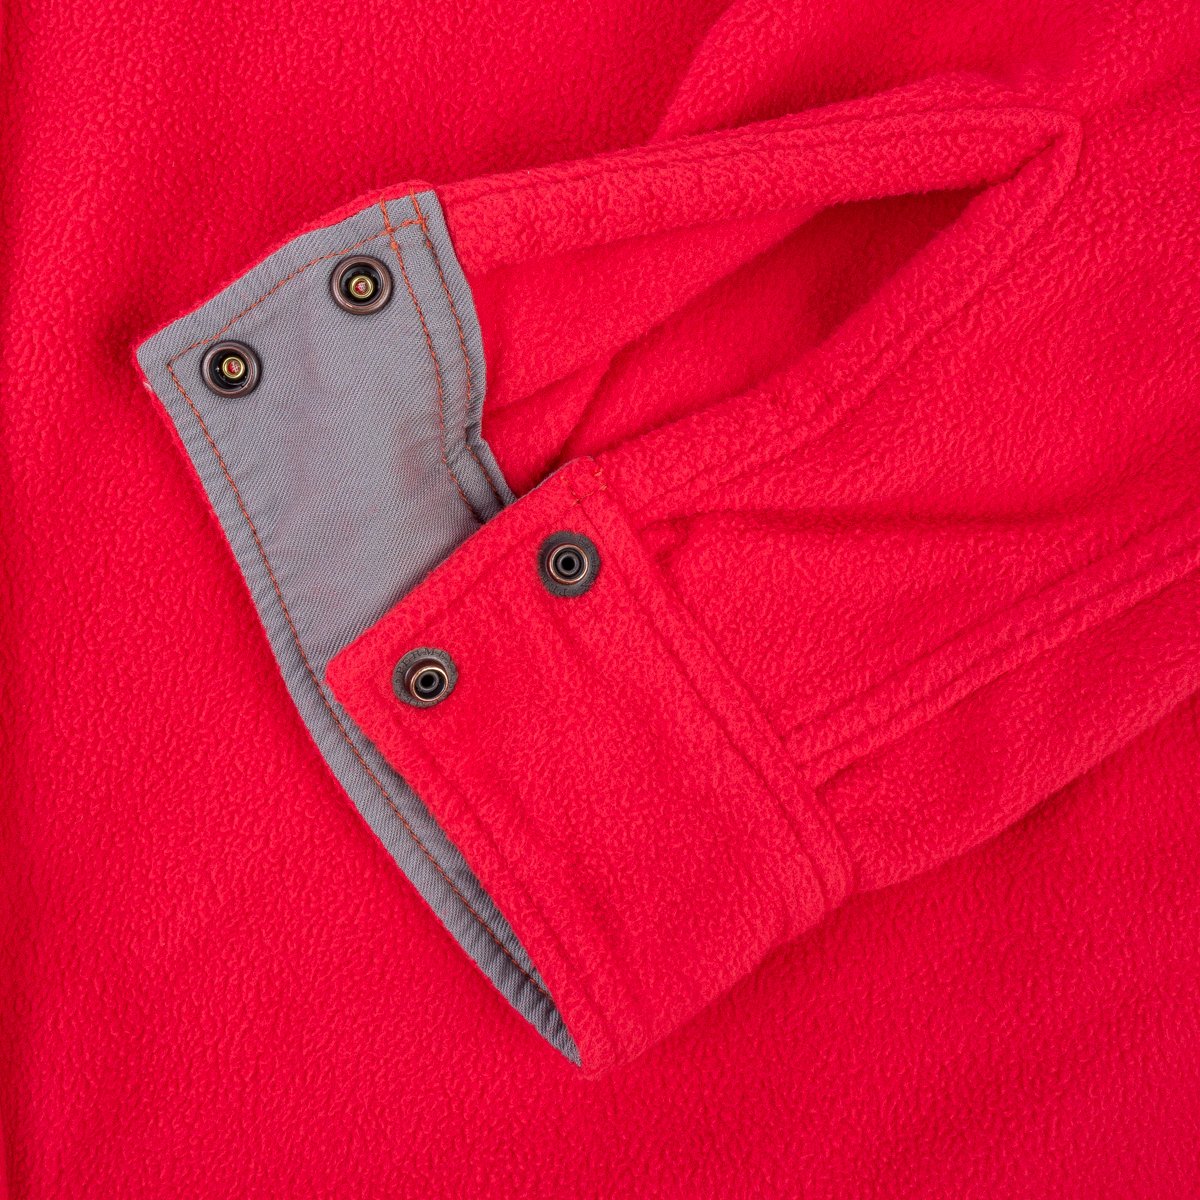 Iron Heart IHSH-287-RED Micro Fleece C.P.O Shirt - Red